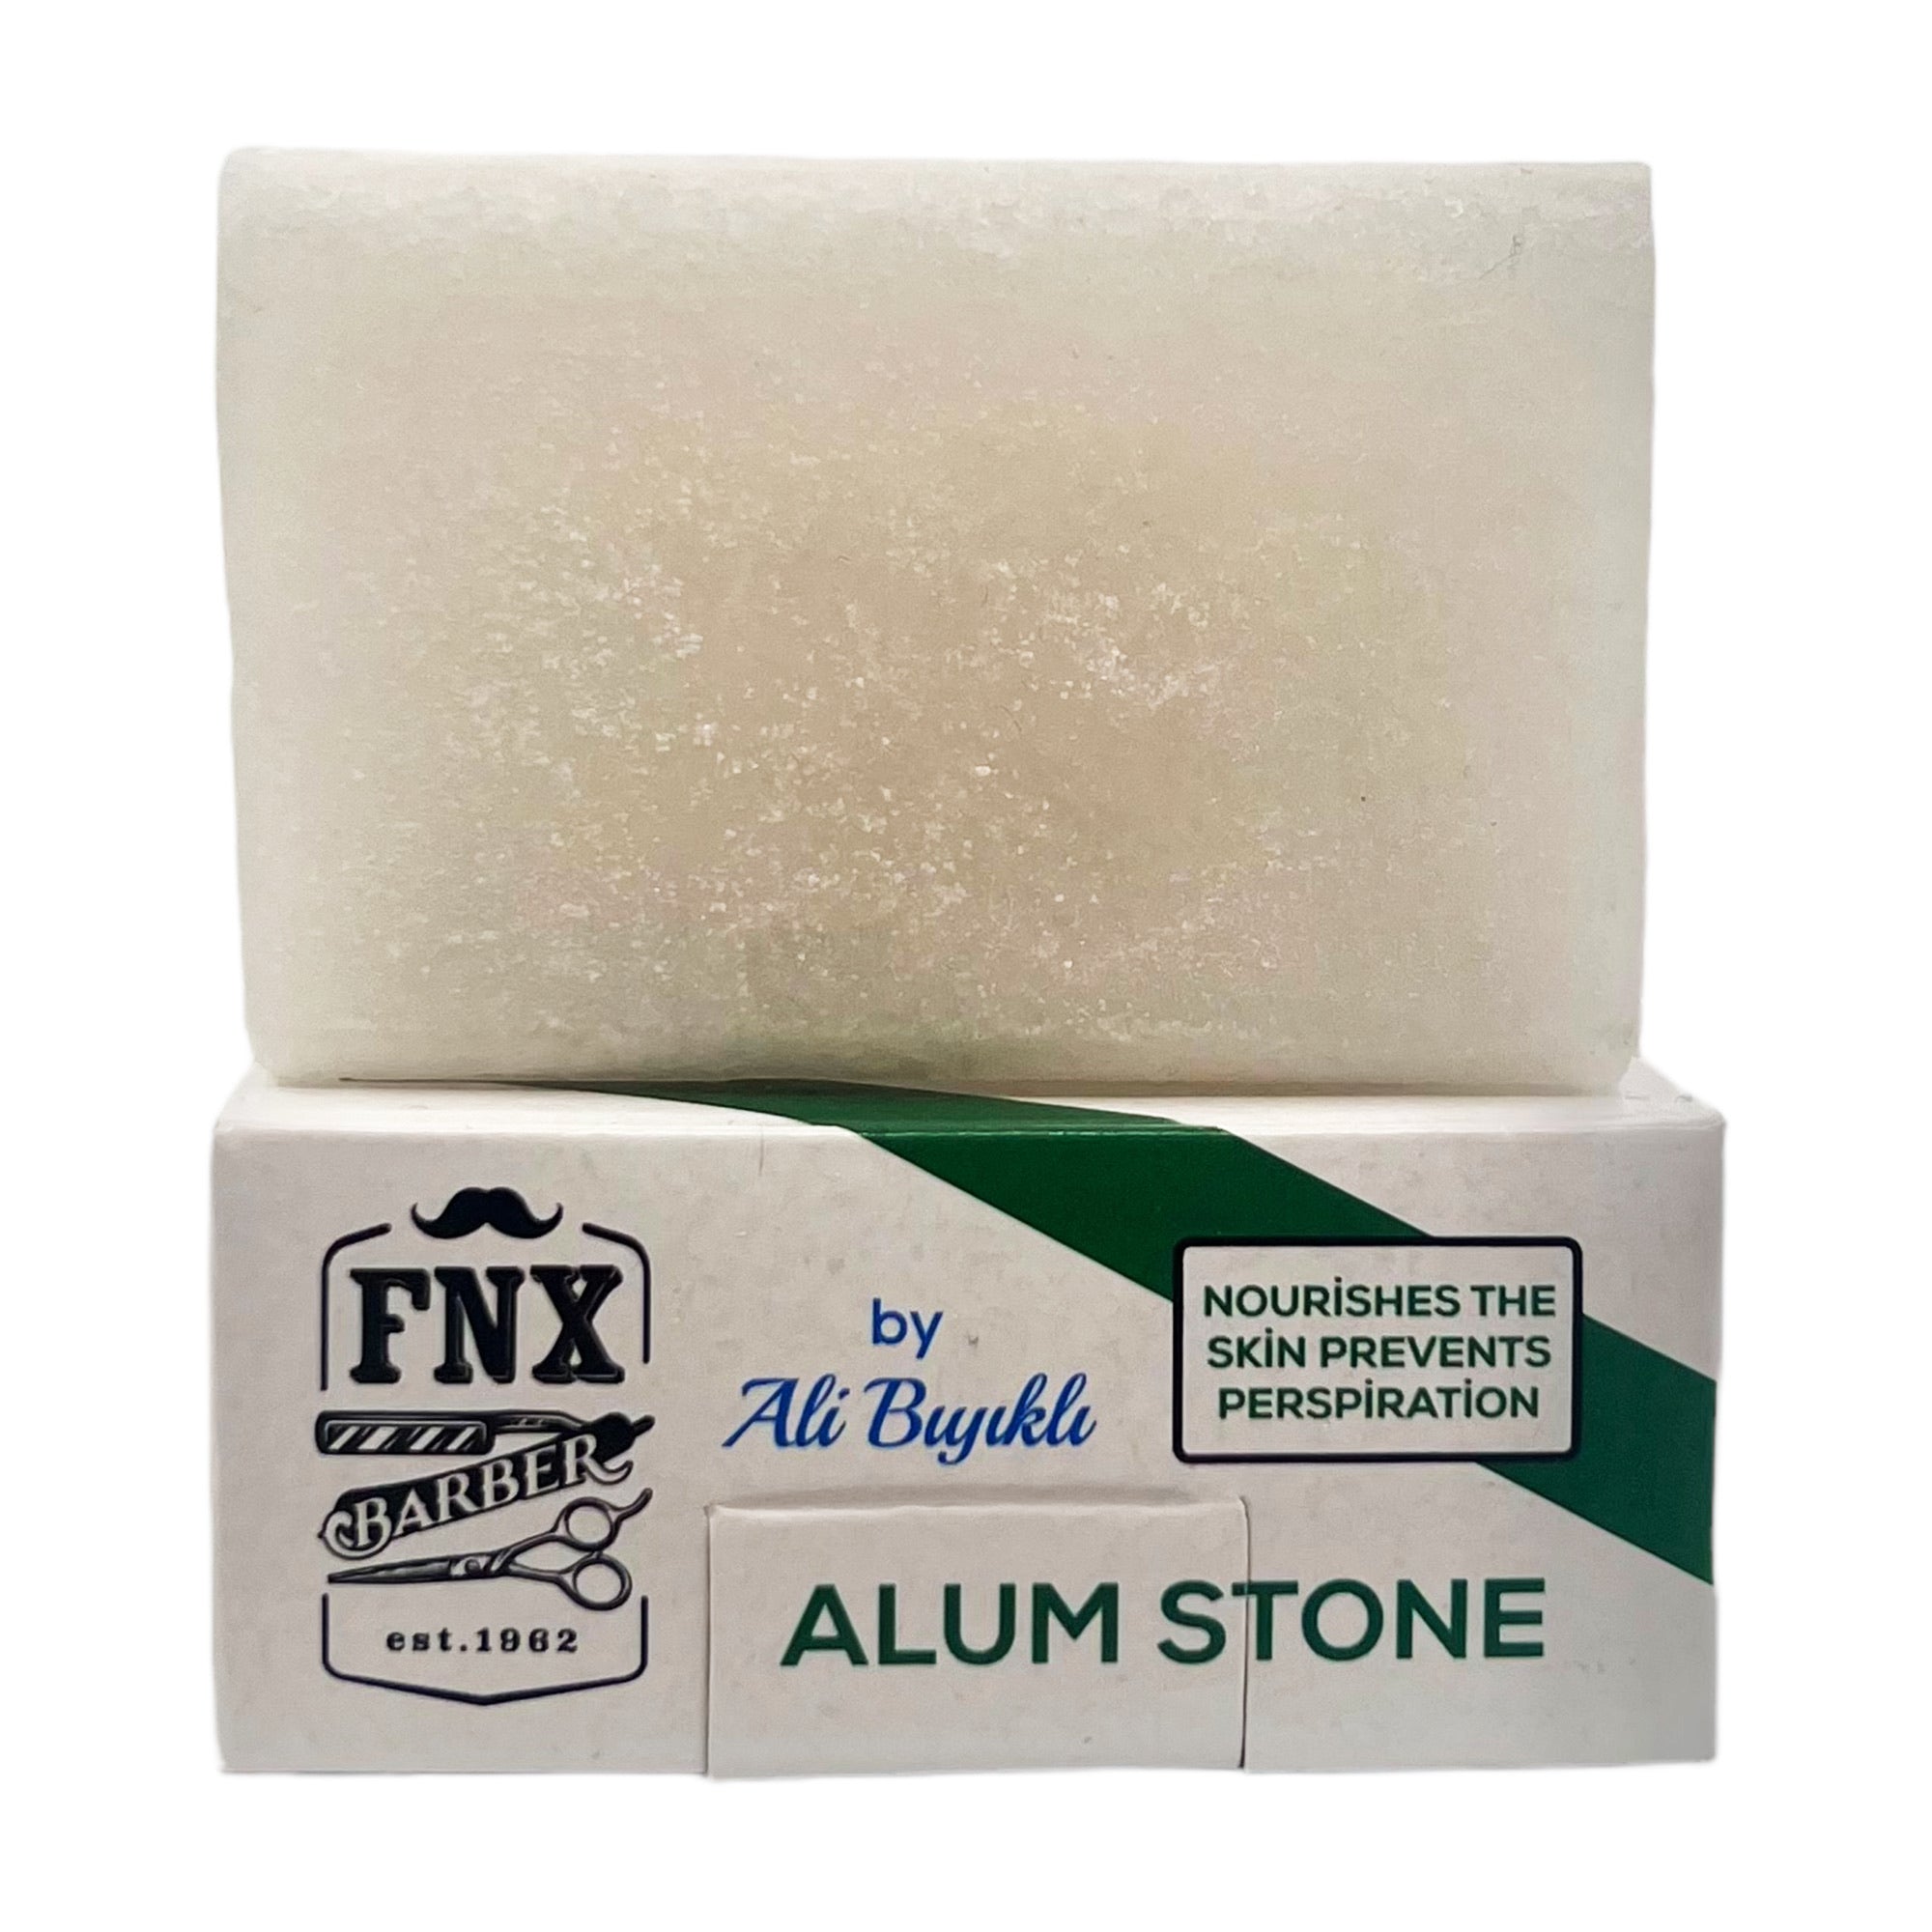 FNX Barber - Alum Stone After Shave Blood Stopper by Ali Biyikli